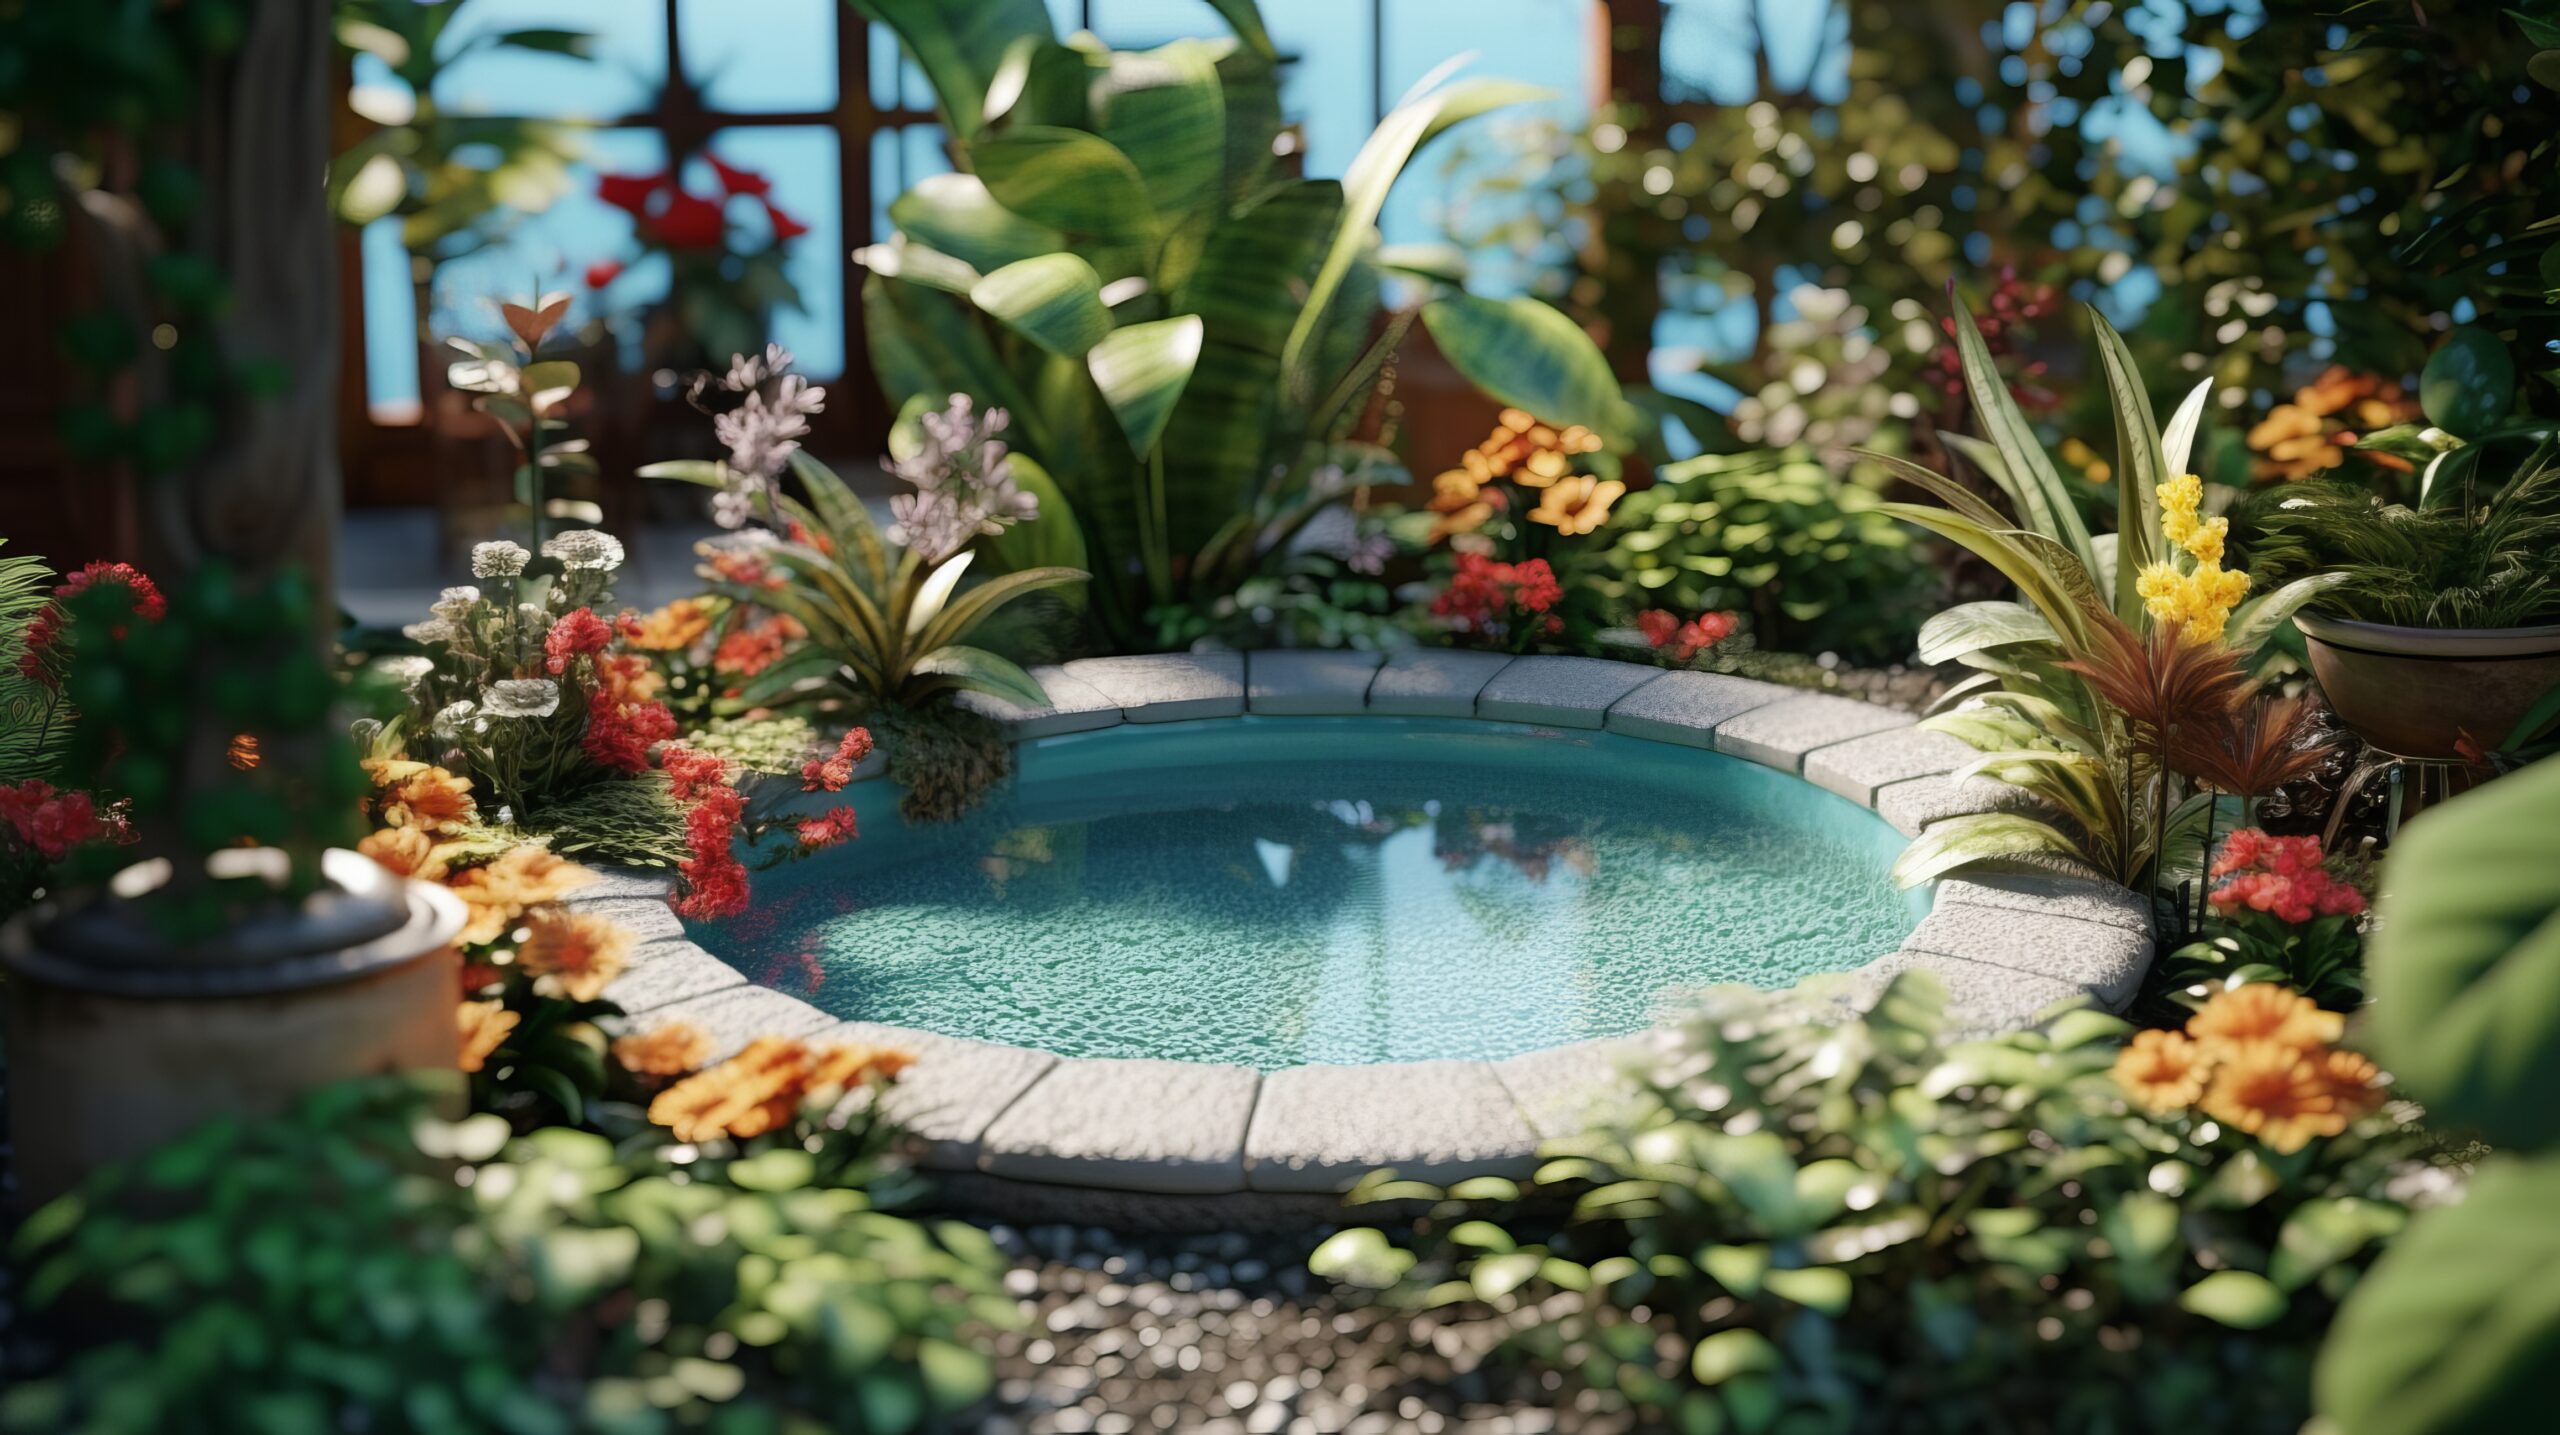 Backyard Pool Ideas On a Budget